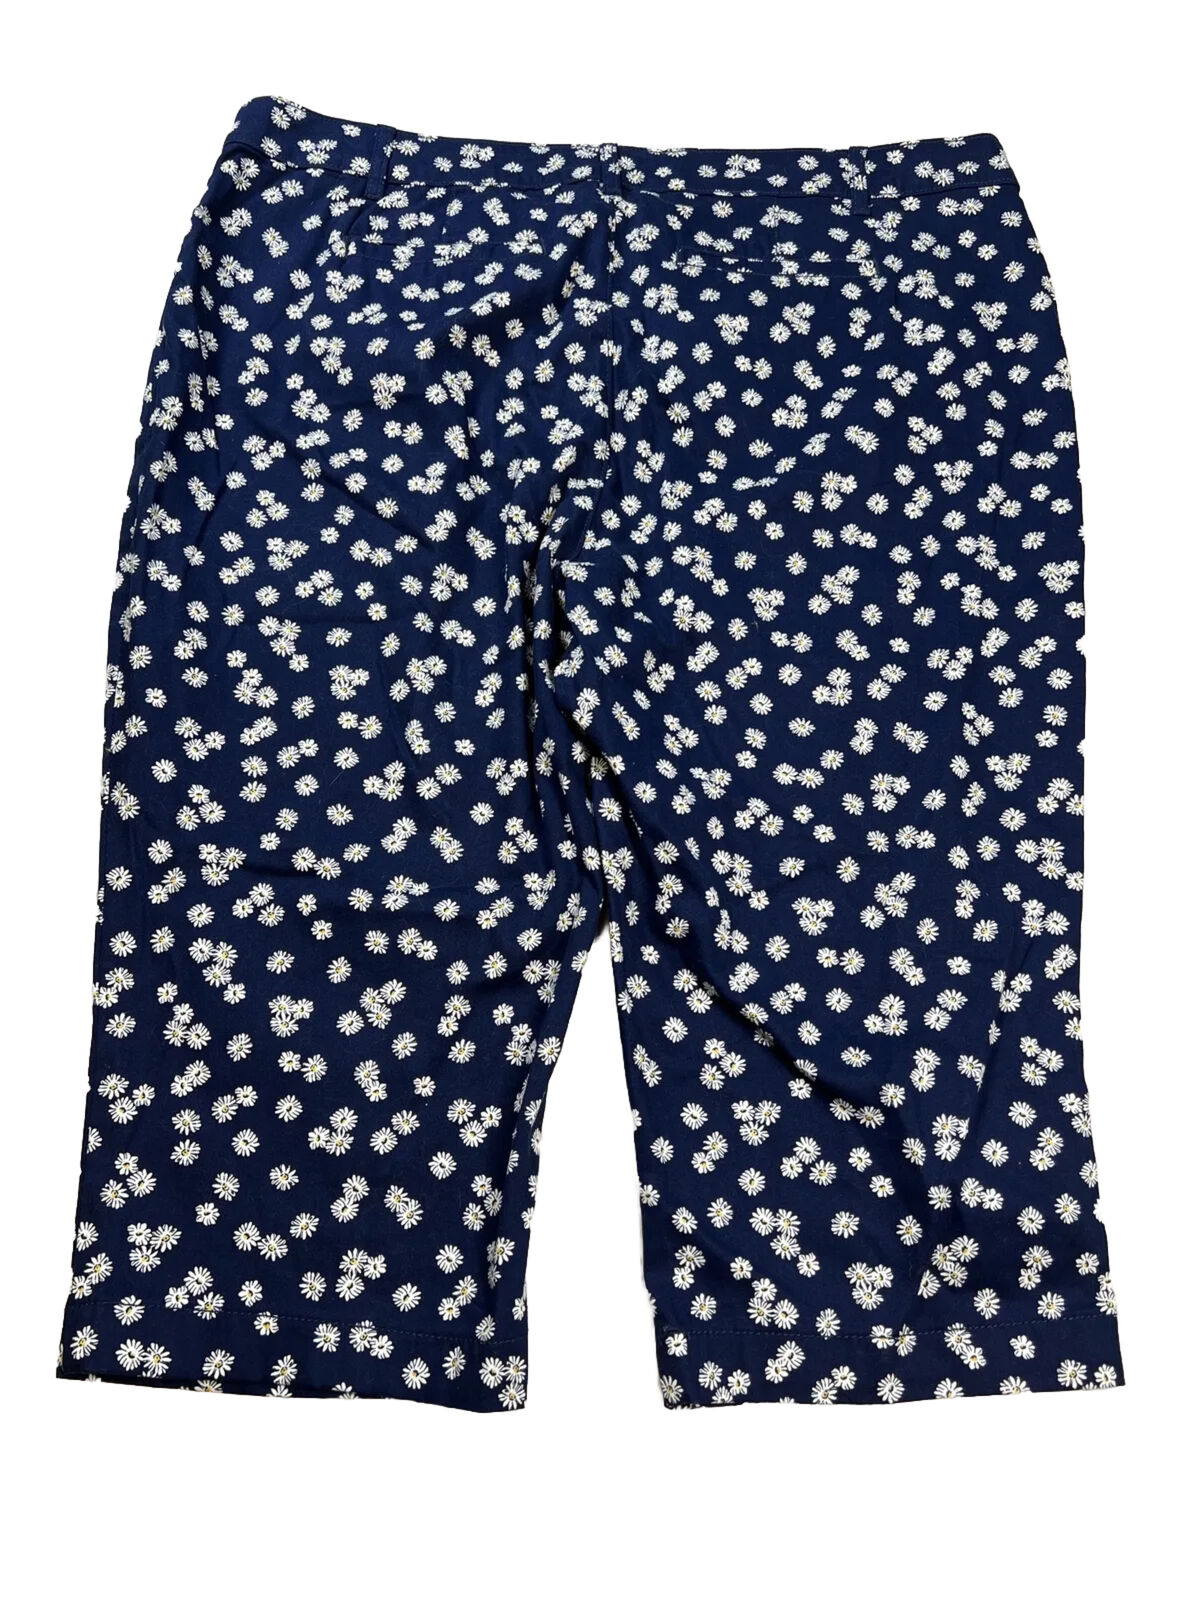 NEW St Johns Bay Women's Navy Blue Daisy Capri Pants - Plus 20W